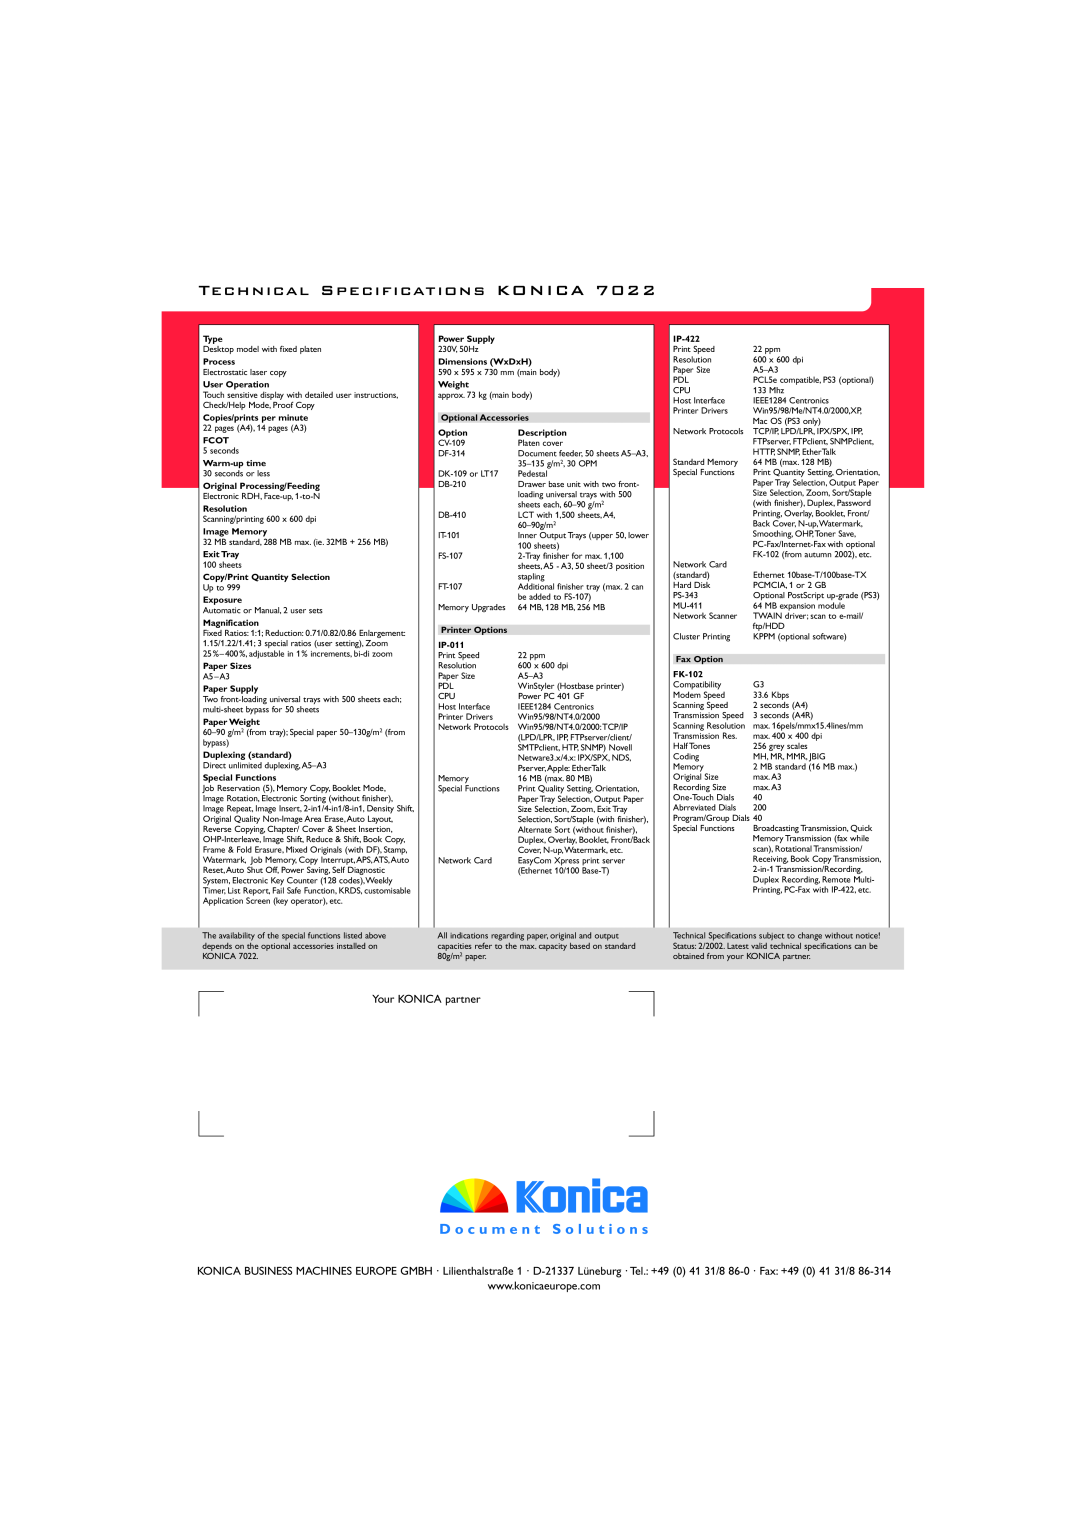 Konica Minolta 7022 manual Technical Specifications KONICA, Your KONICA partner 